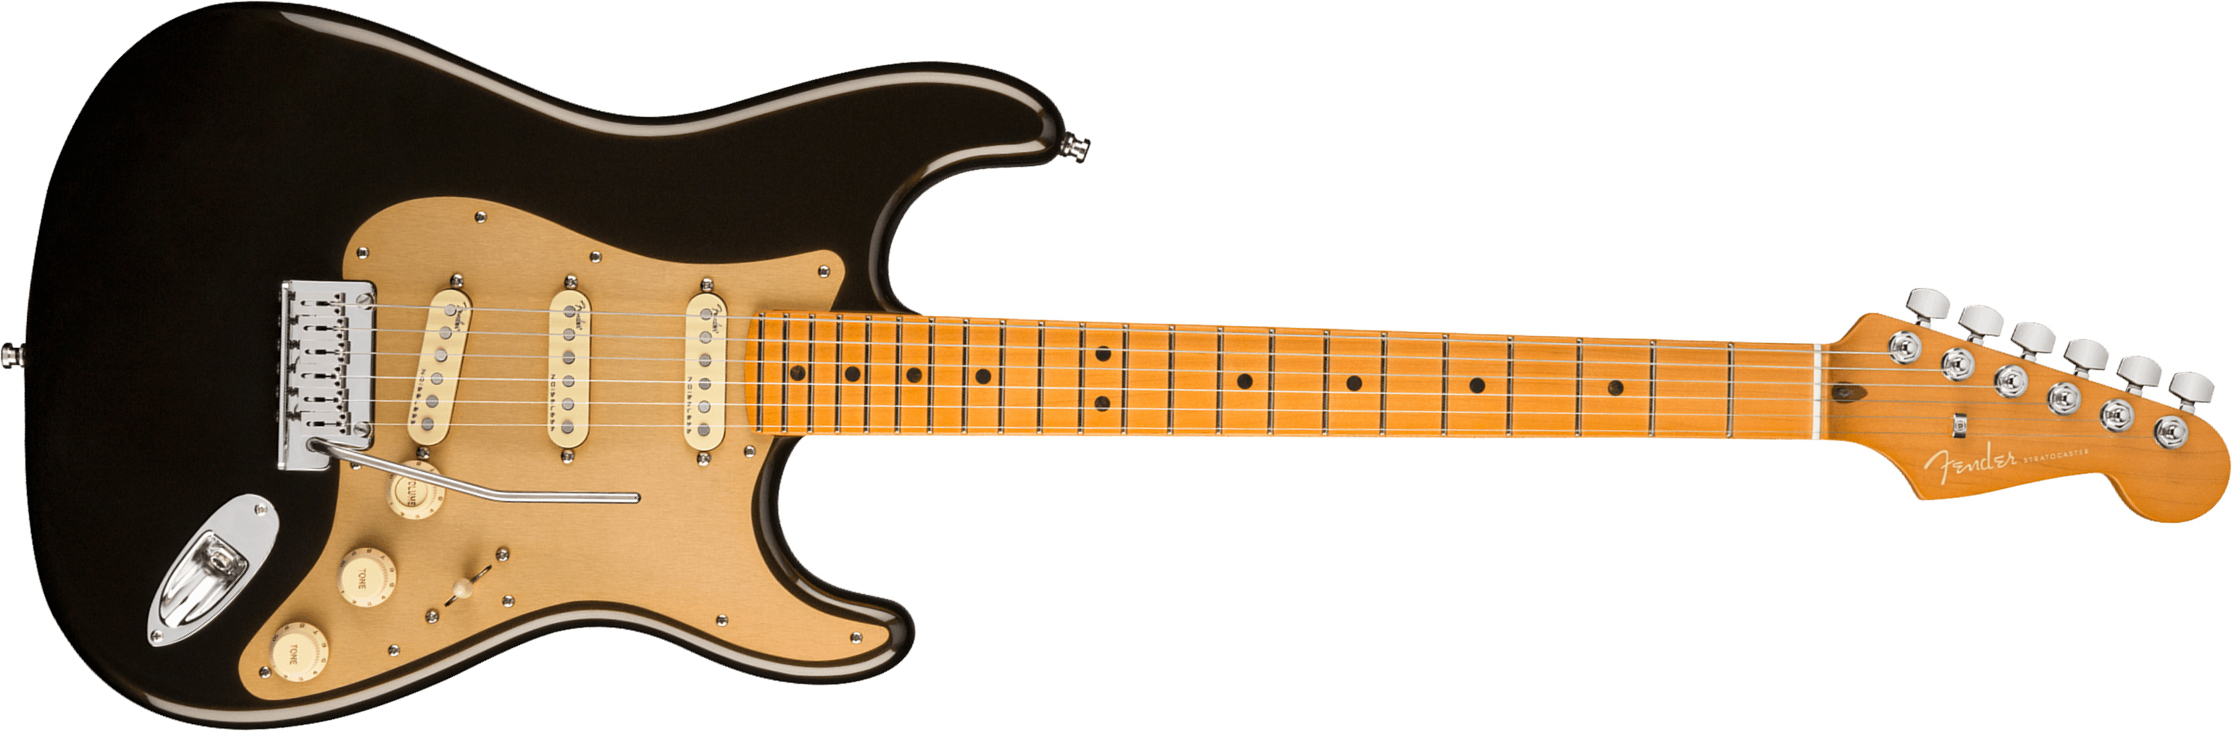 Fender Strat American Ultra 2019 Usa Mn - Texas Tea - E-Gitarre in Str-Form - Main picture